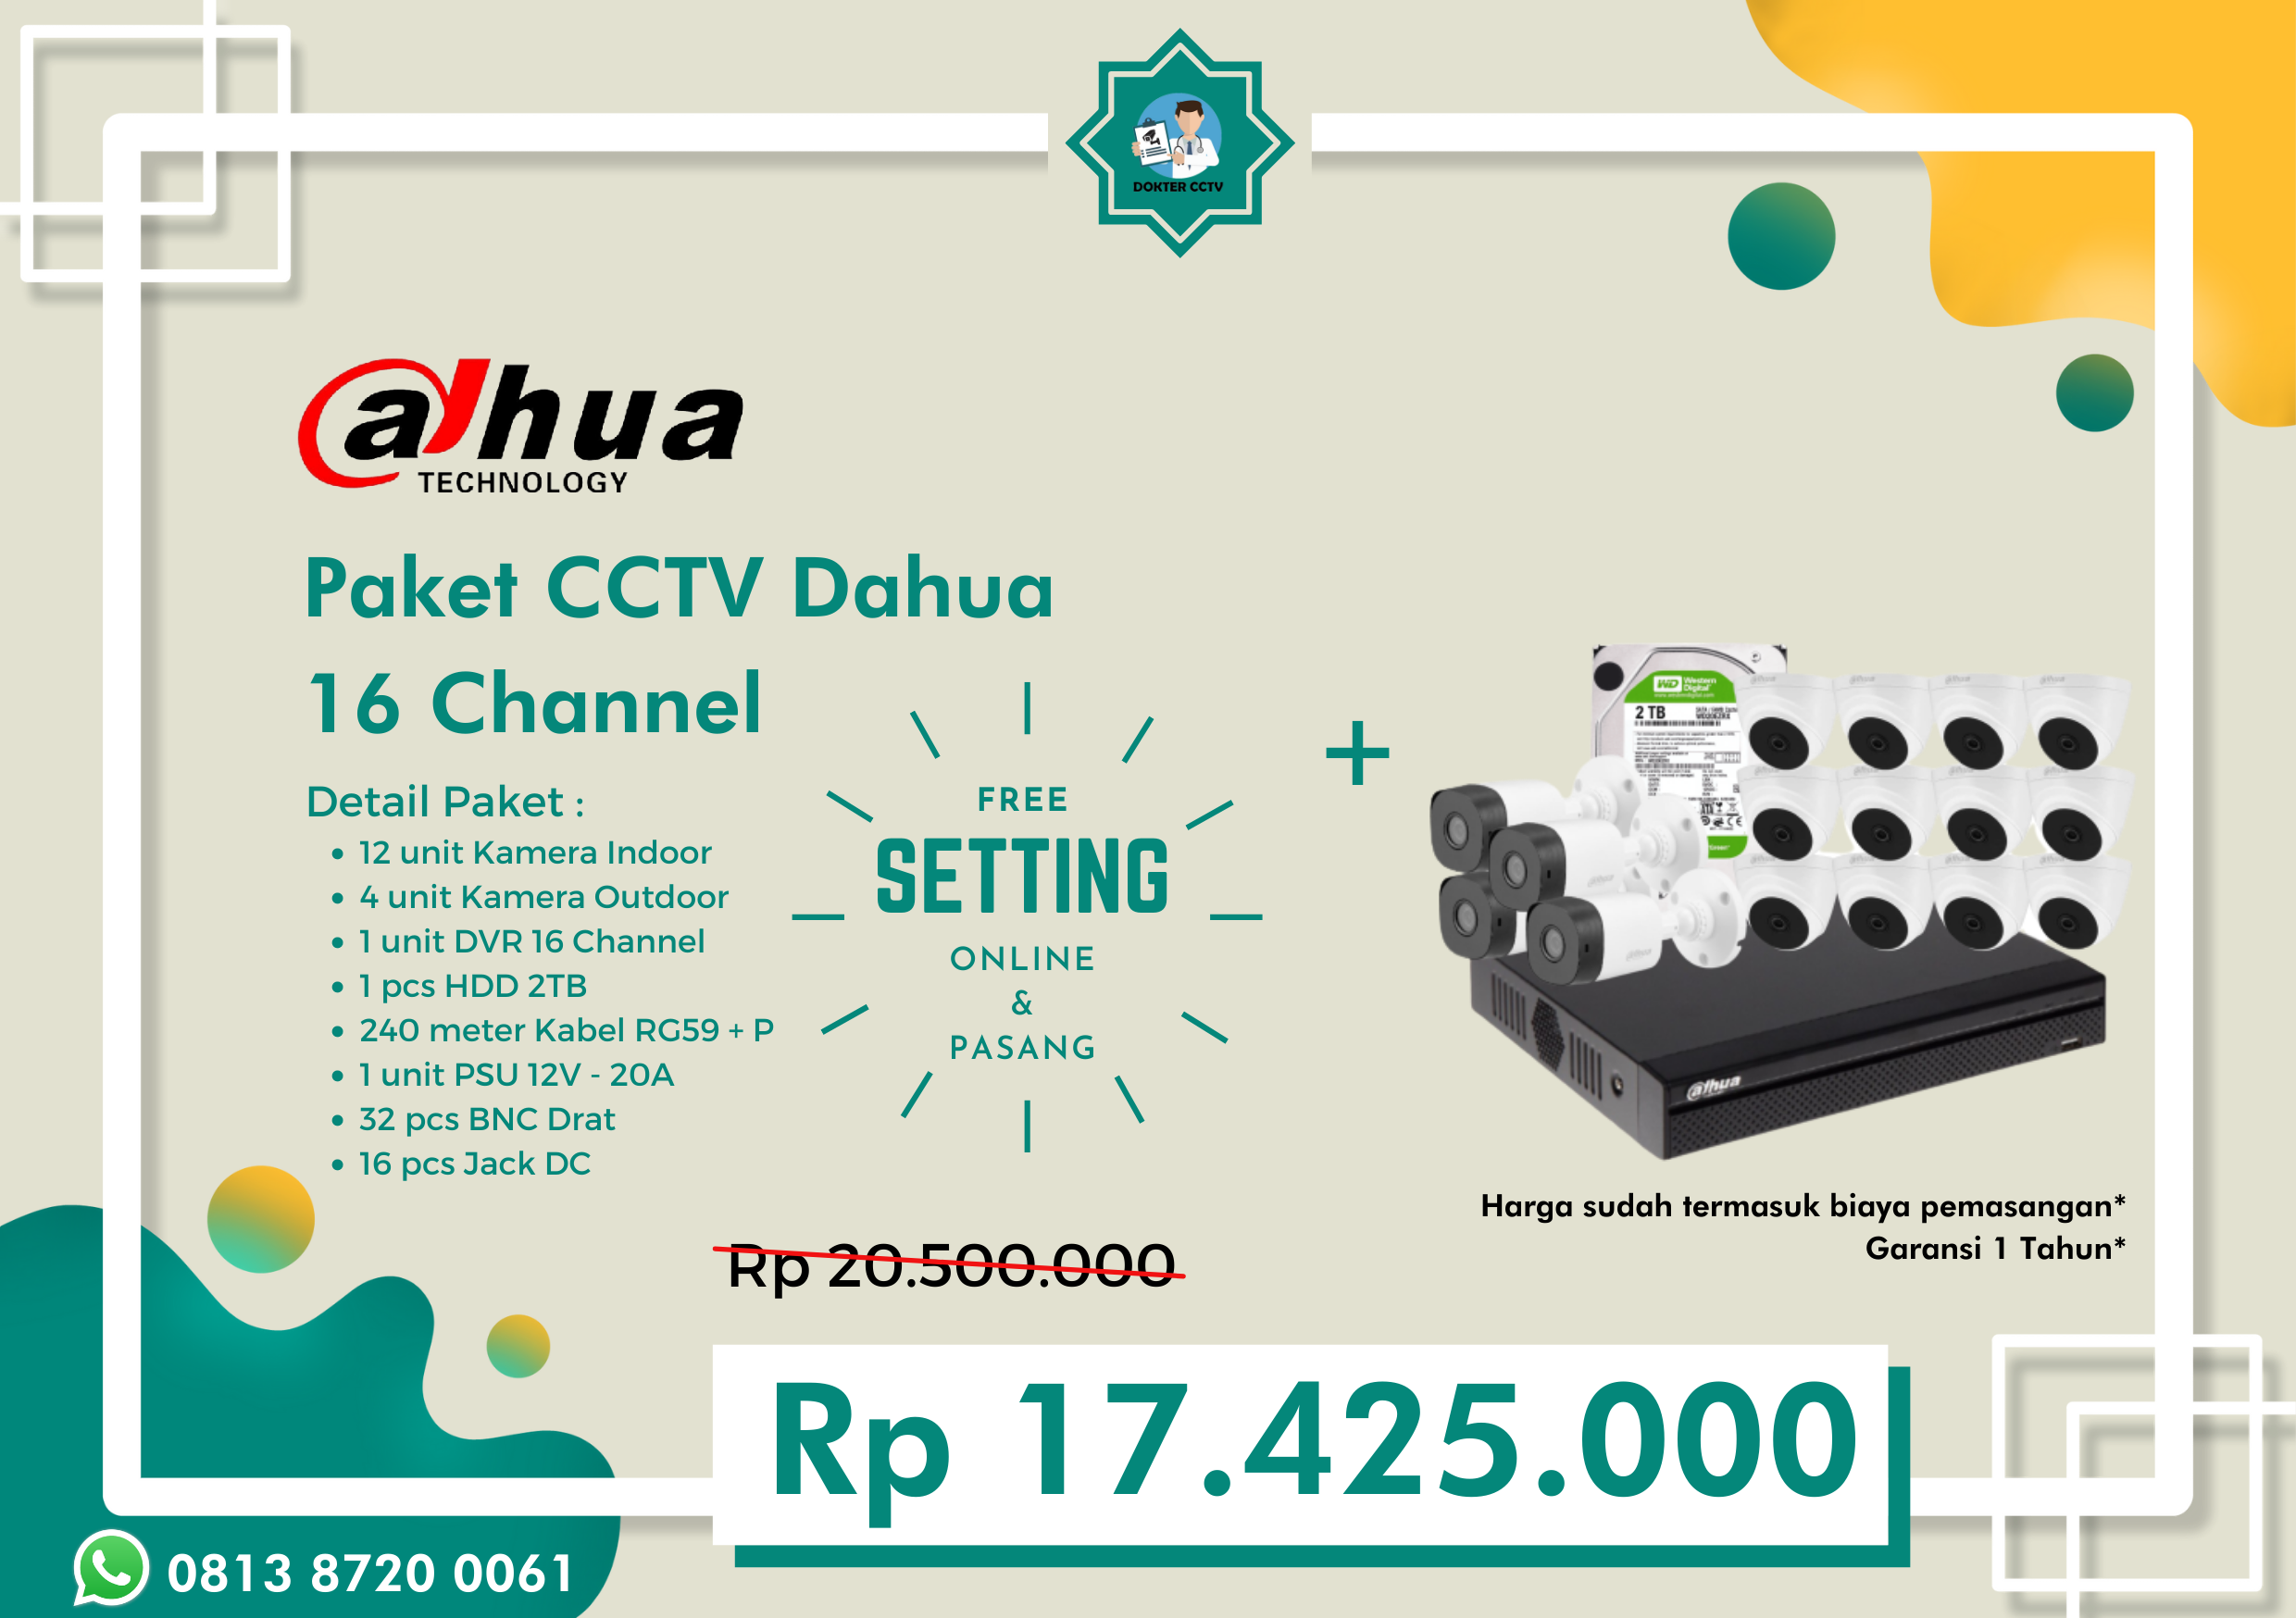 Paket CCTV Dahua 16 Channel